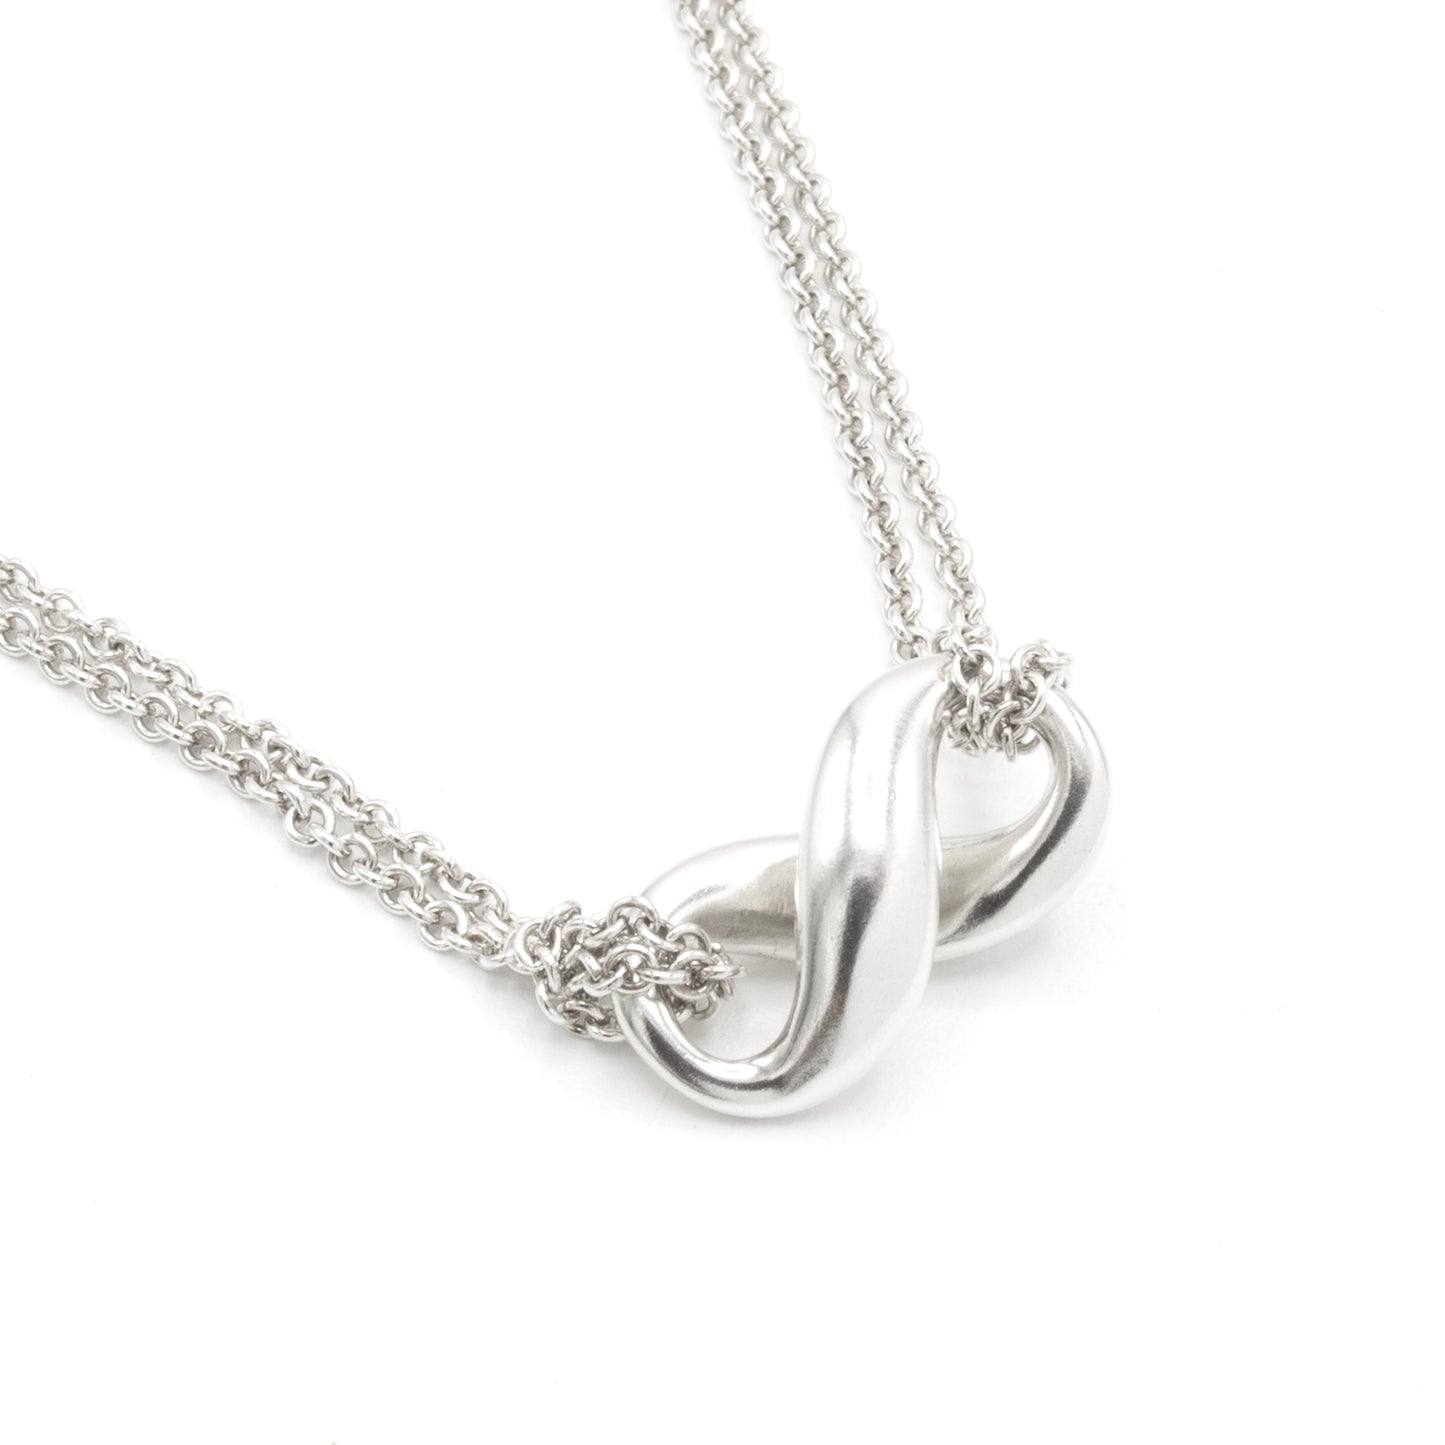 Tiffany Infinity necklace